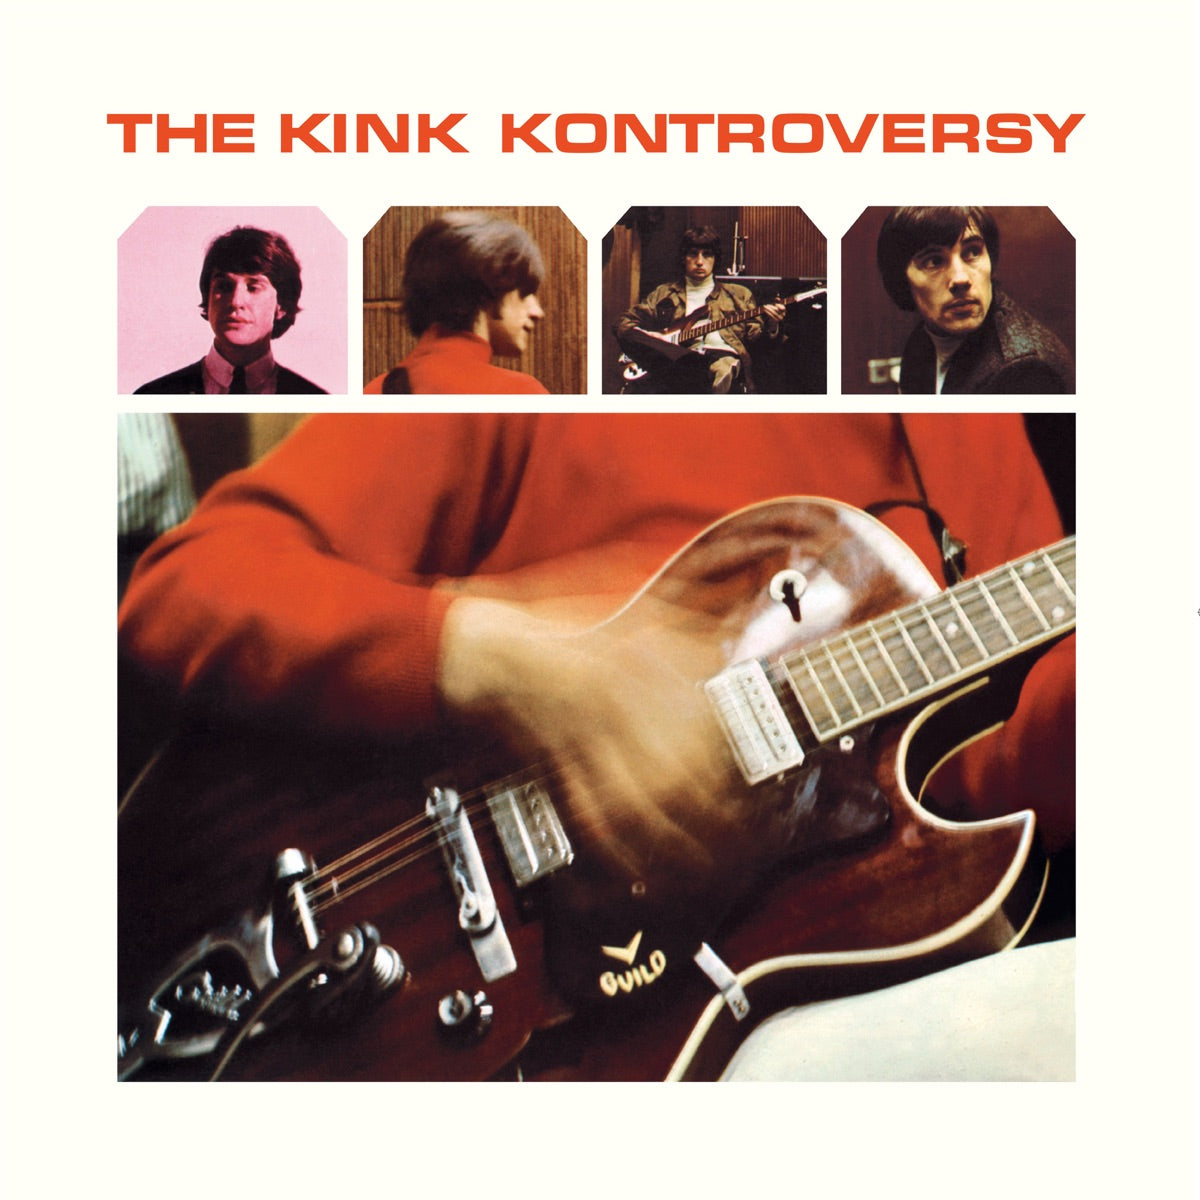 Kinks, The: The Kink Kontroversy (Vinyl LP)